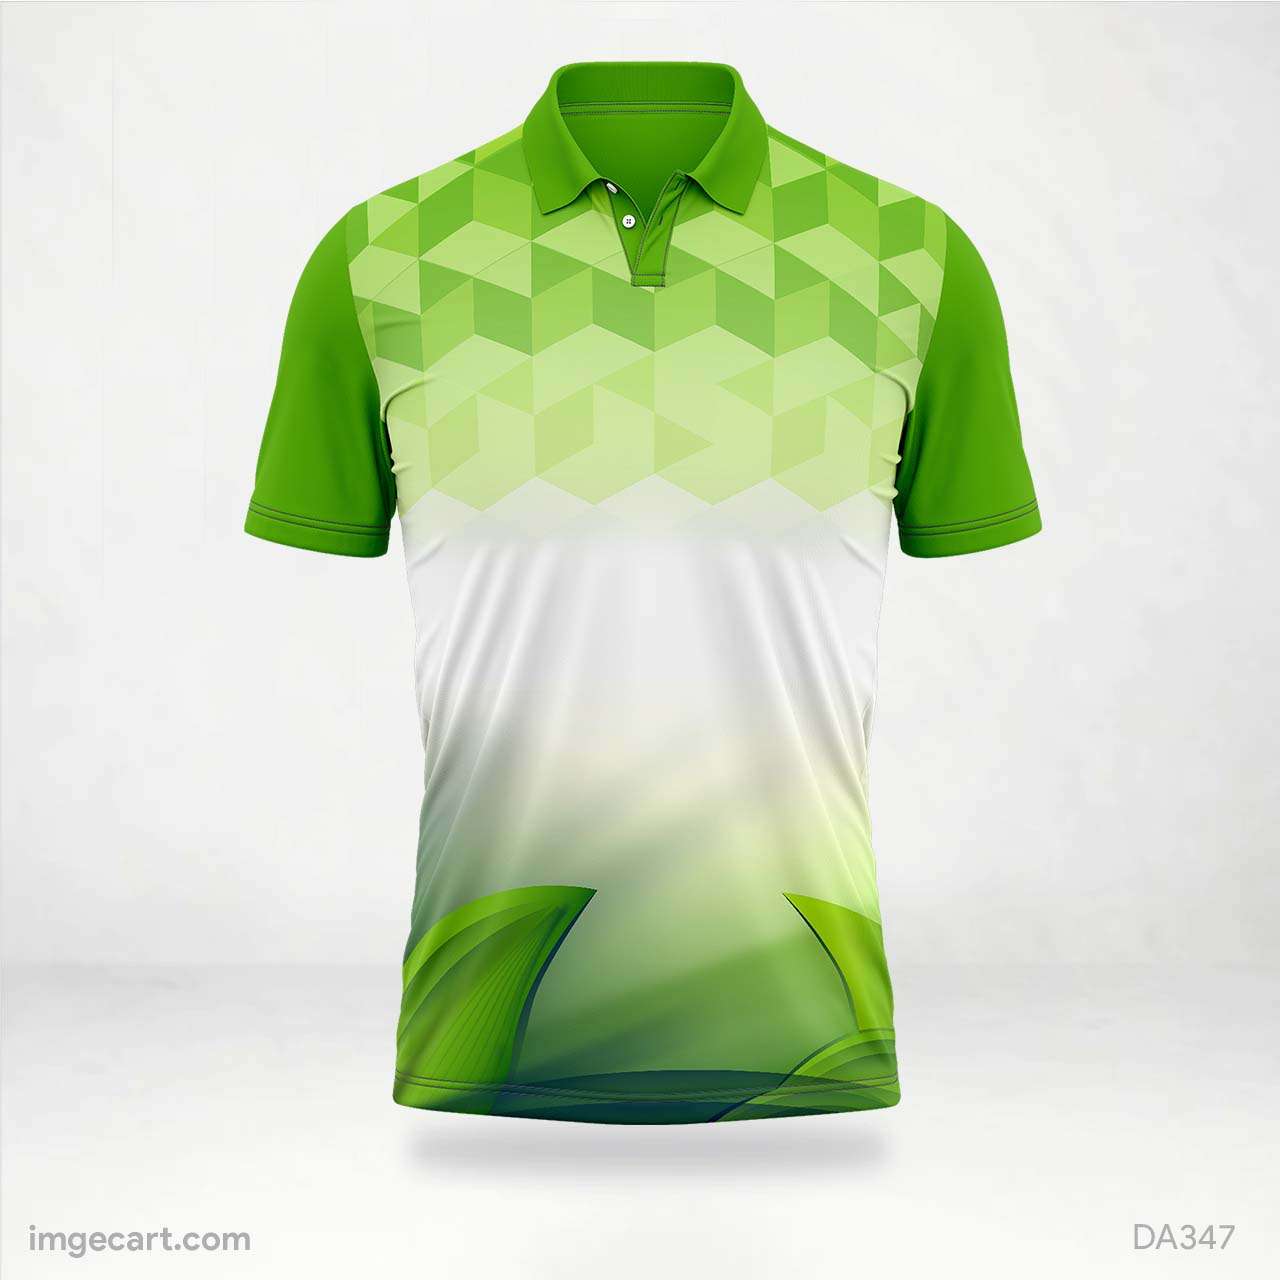 Cricket jersey design Green with White Gradient - imgecart